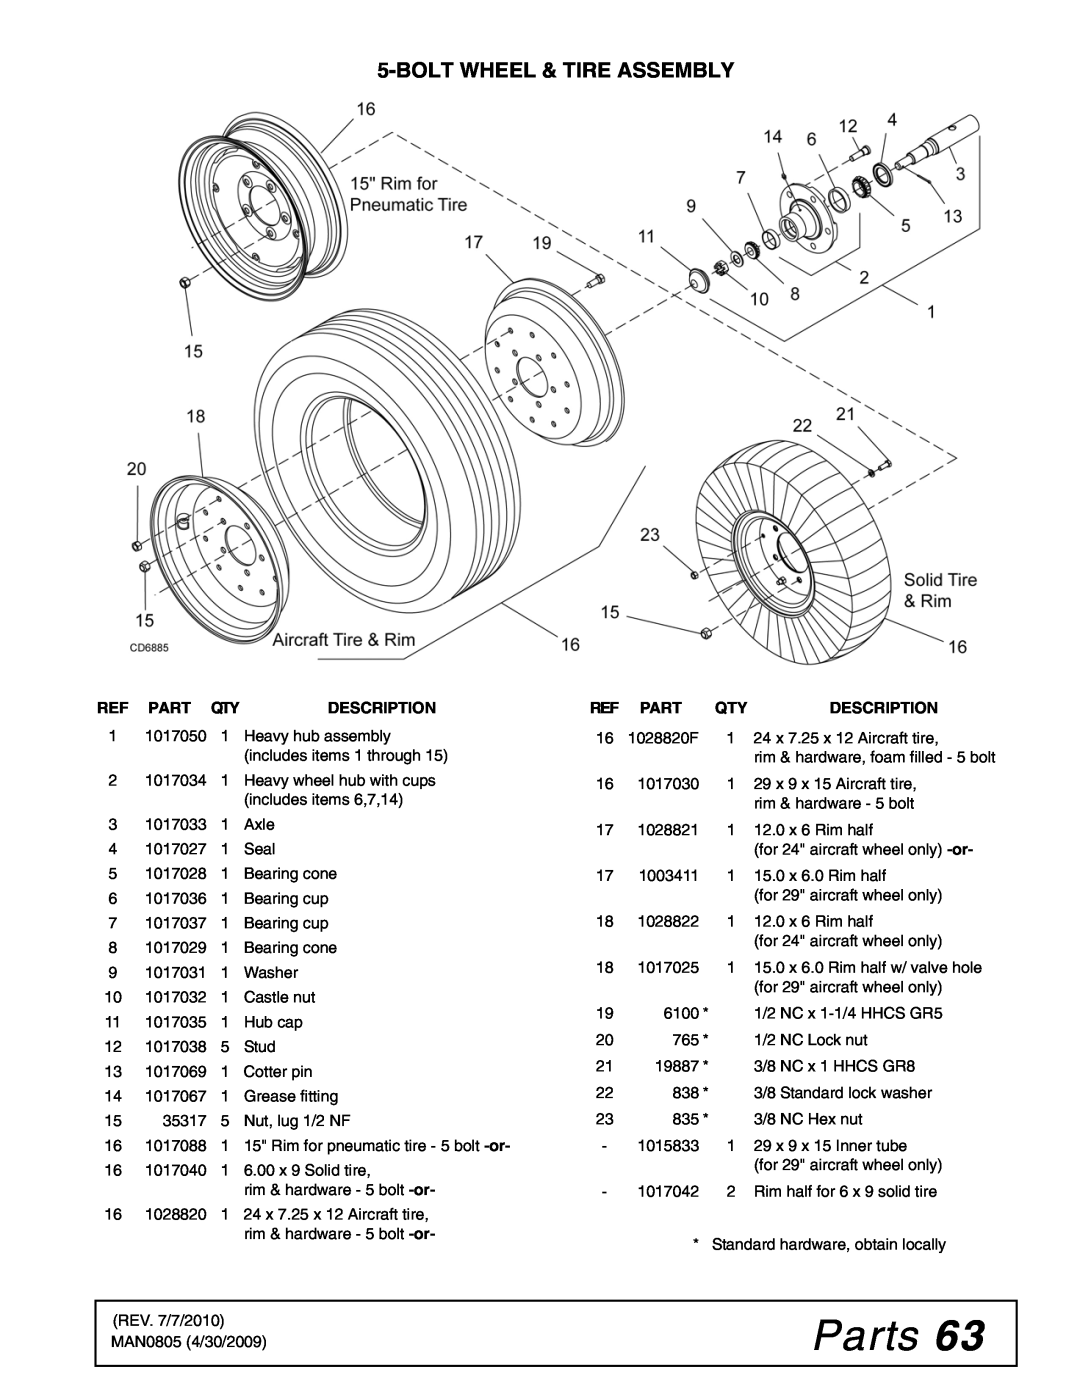 Woods Equipment BW180HB, BW180HDQ manual Parts, Boltwheel & Tire Assembly, Ref Part Qty, Description 